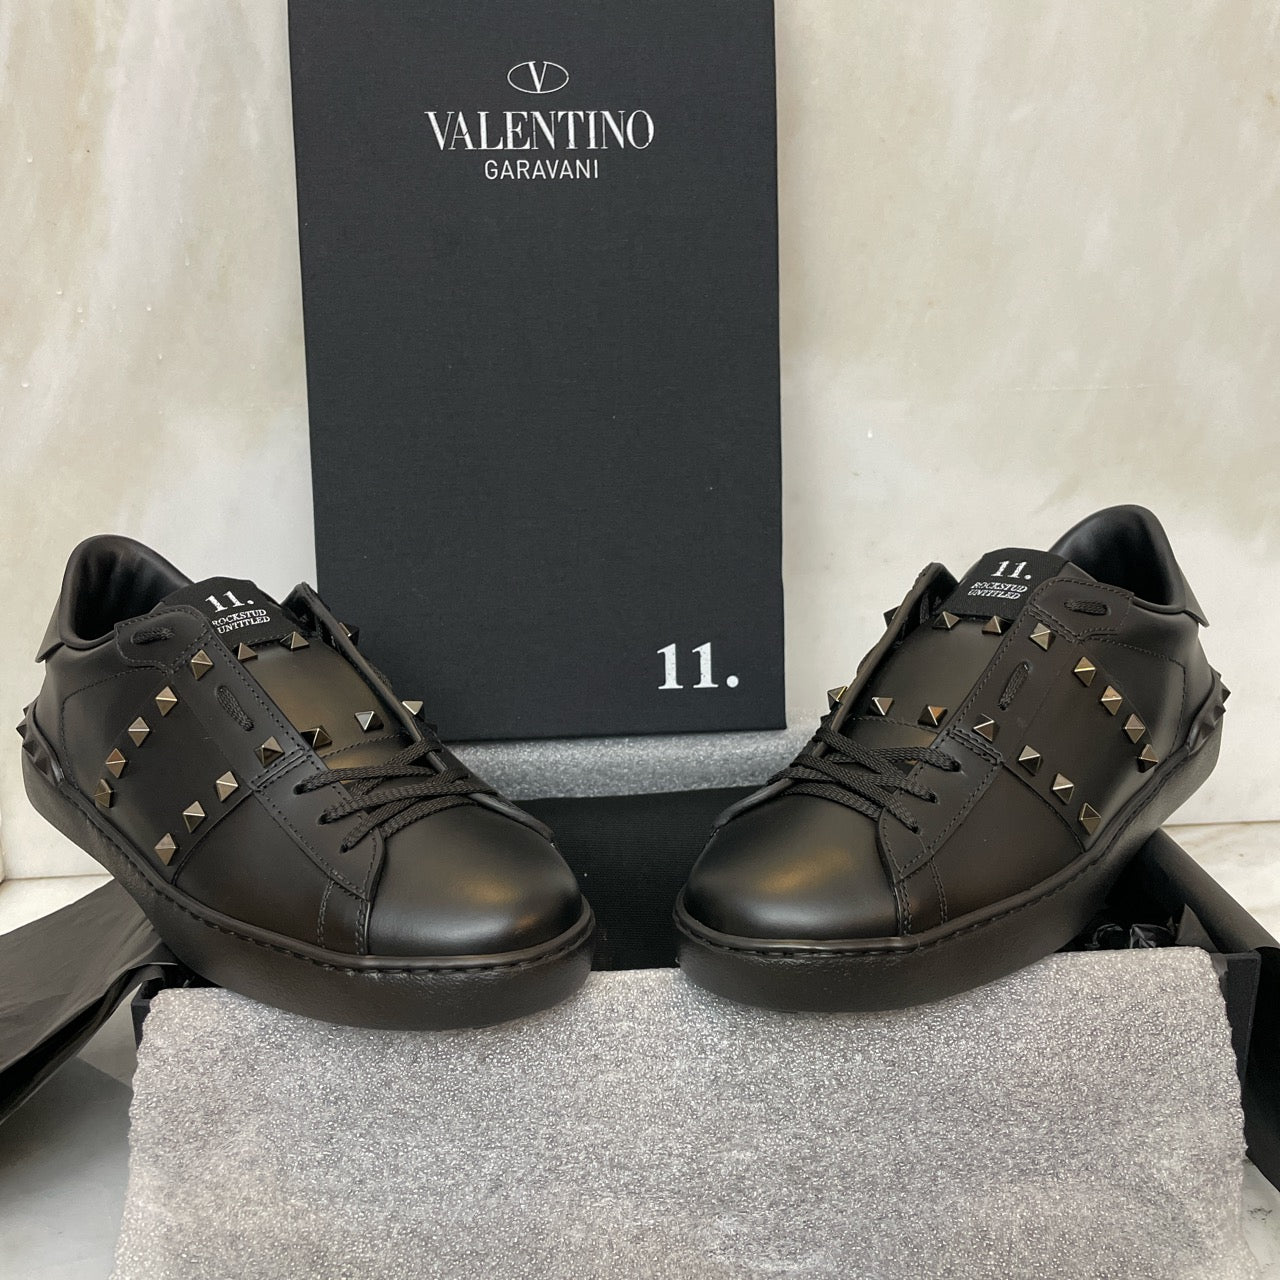 VALENTINO GARAVANI Valentino Garavani Rockstud Untitled leather